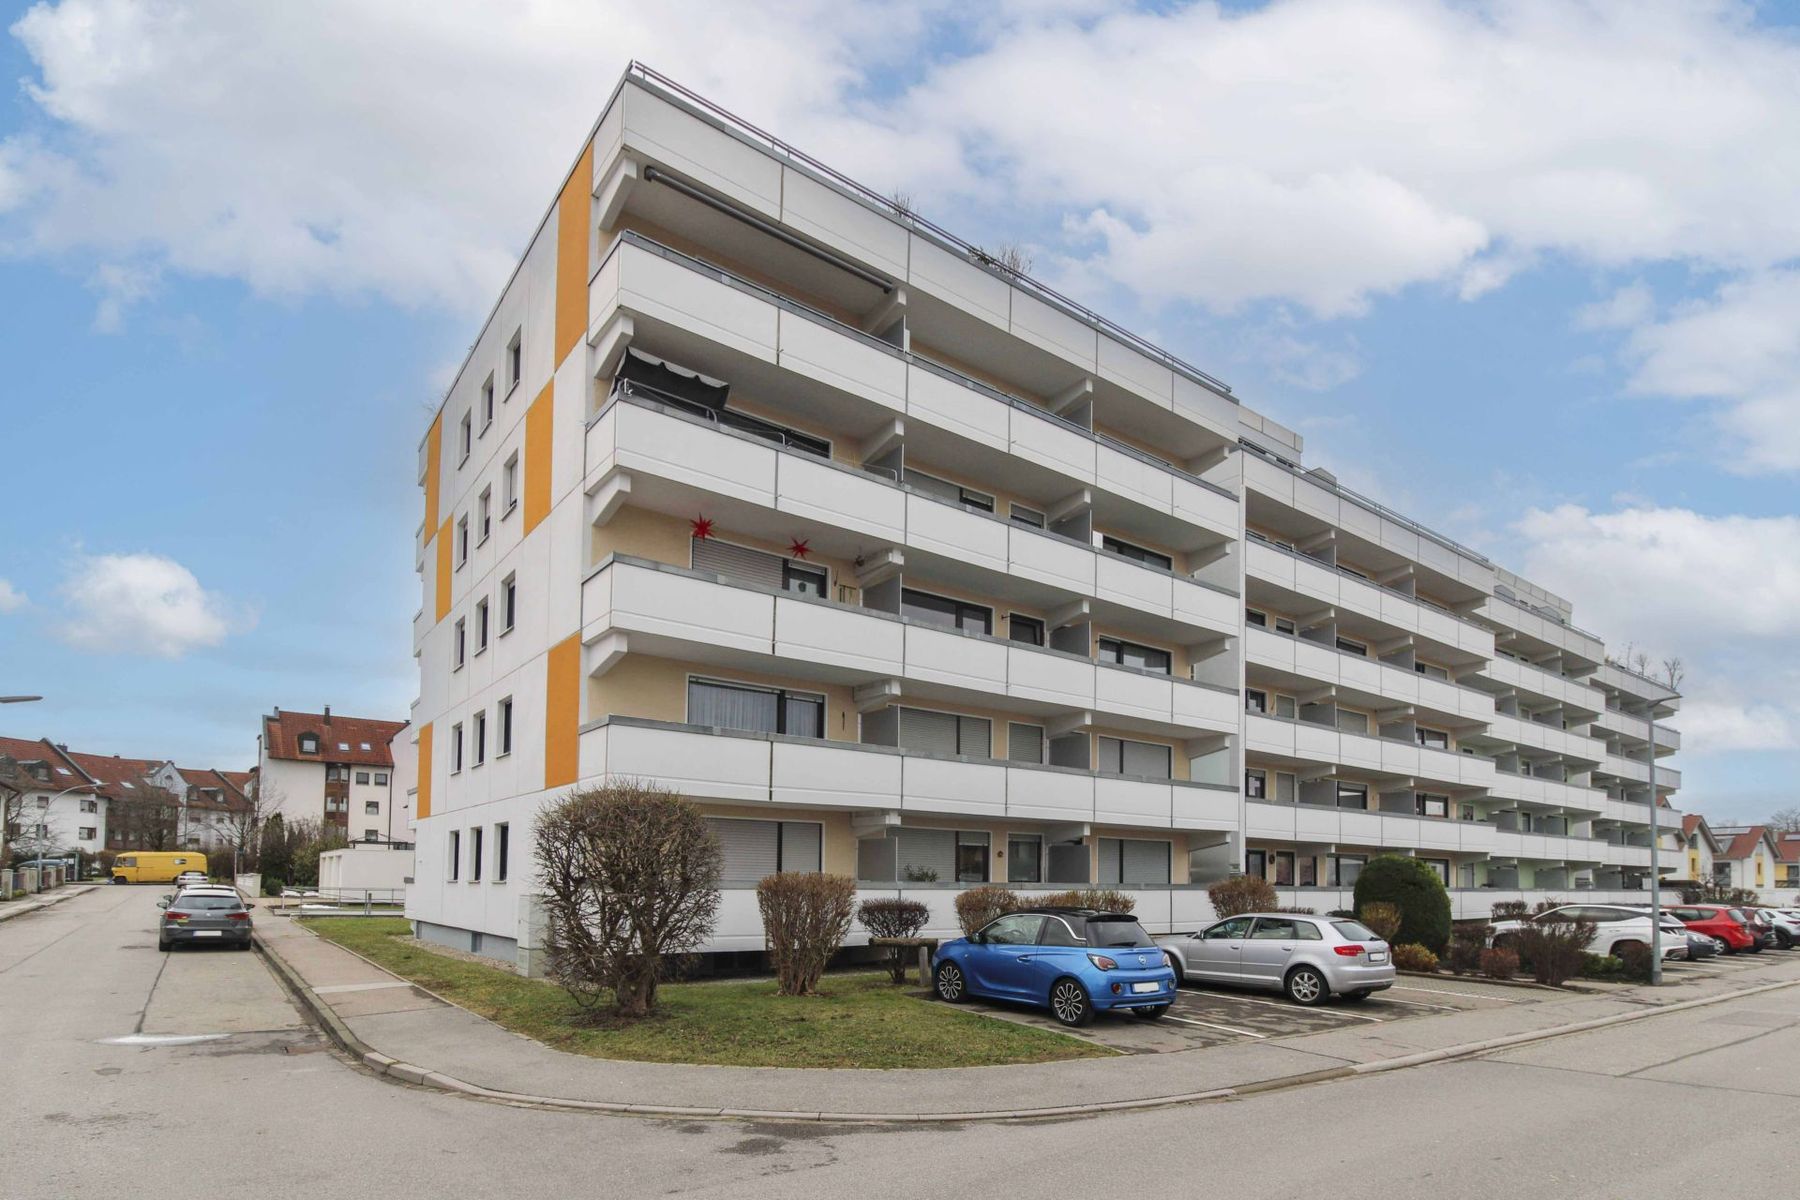 Immobilie zum Kauf 249.000 € 2 Zimmer 78 m²<br/>Fläche St. Mang - Kottern Kempten (Allgäu) 87437